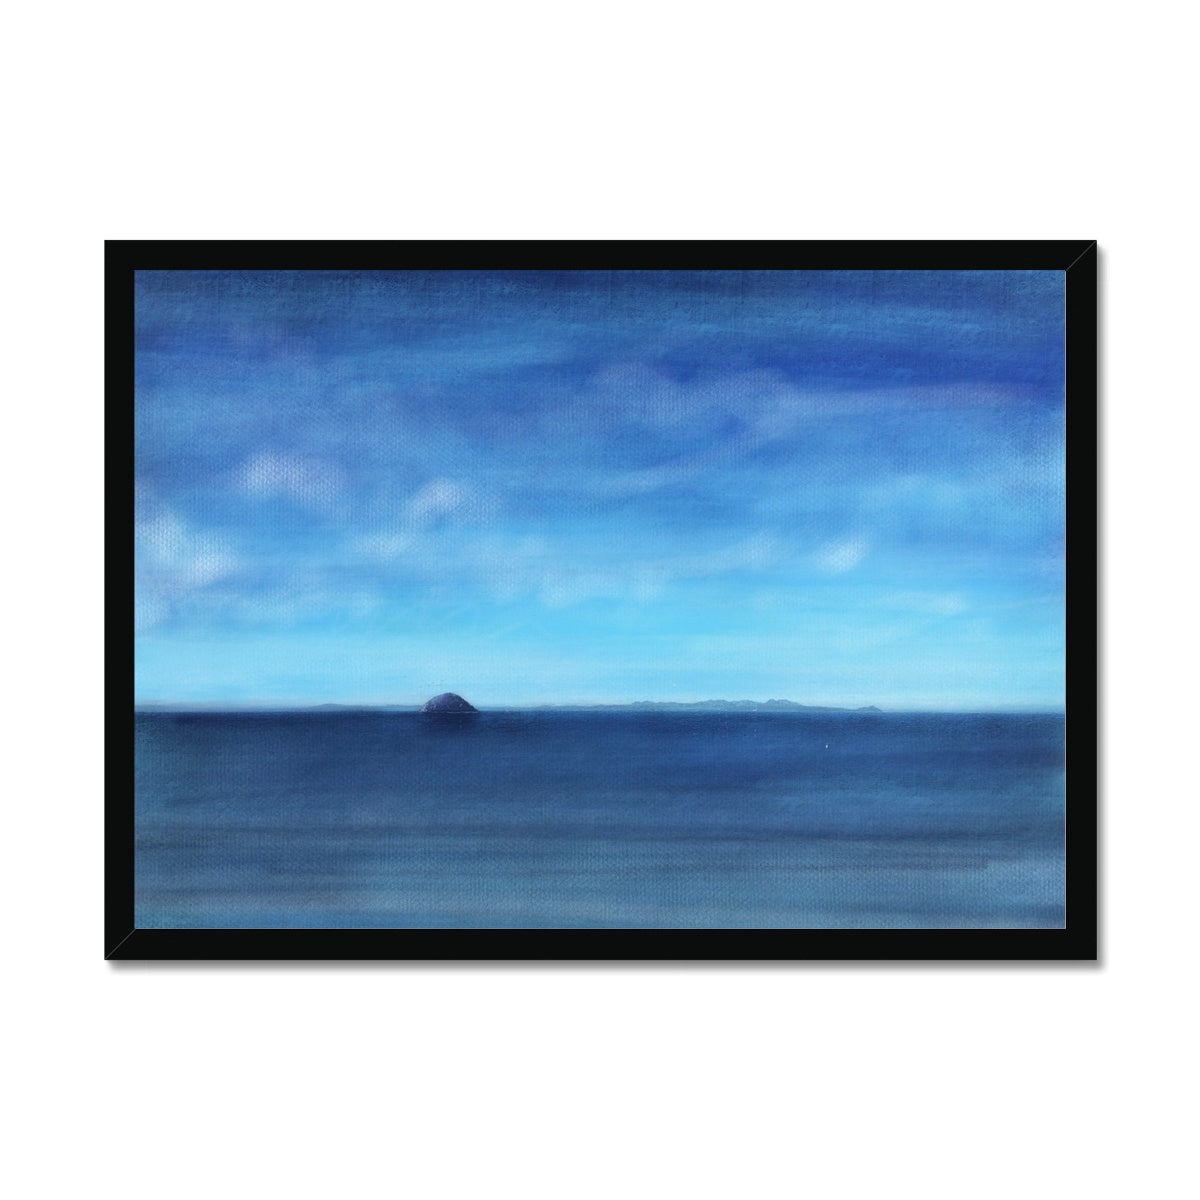 Ailsa Craig & Arran Painting | Framed Prints From Scotland-Framed Prints-Arran Art Gallery-A2 Landscape-Black Frame-Paintings, Prints, Homeware, Art Gifts From Scotland By Scottish Artist Kevin Hunter